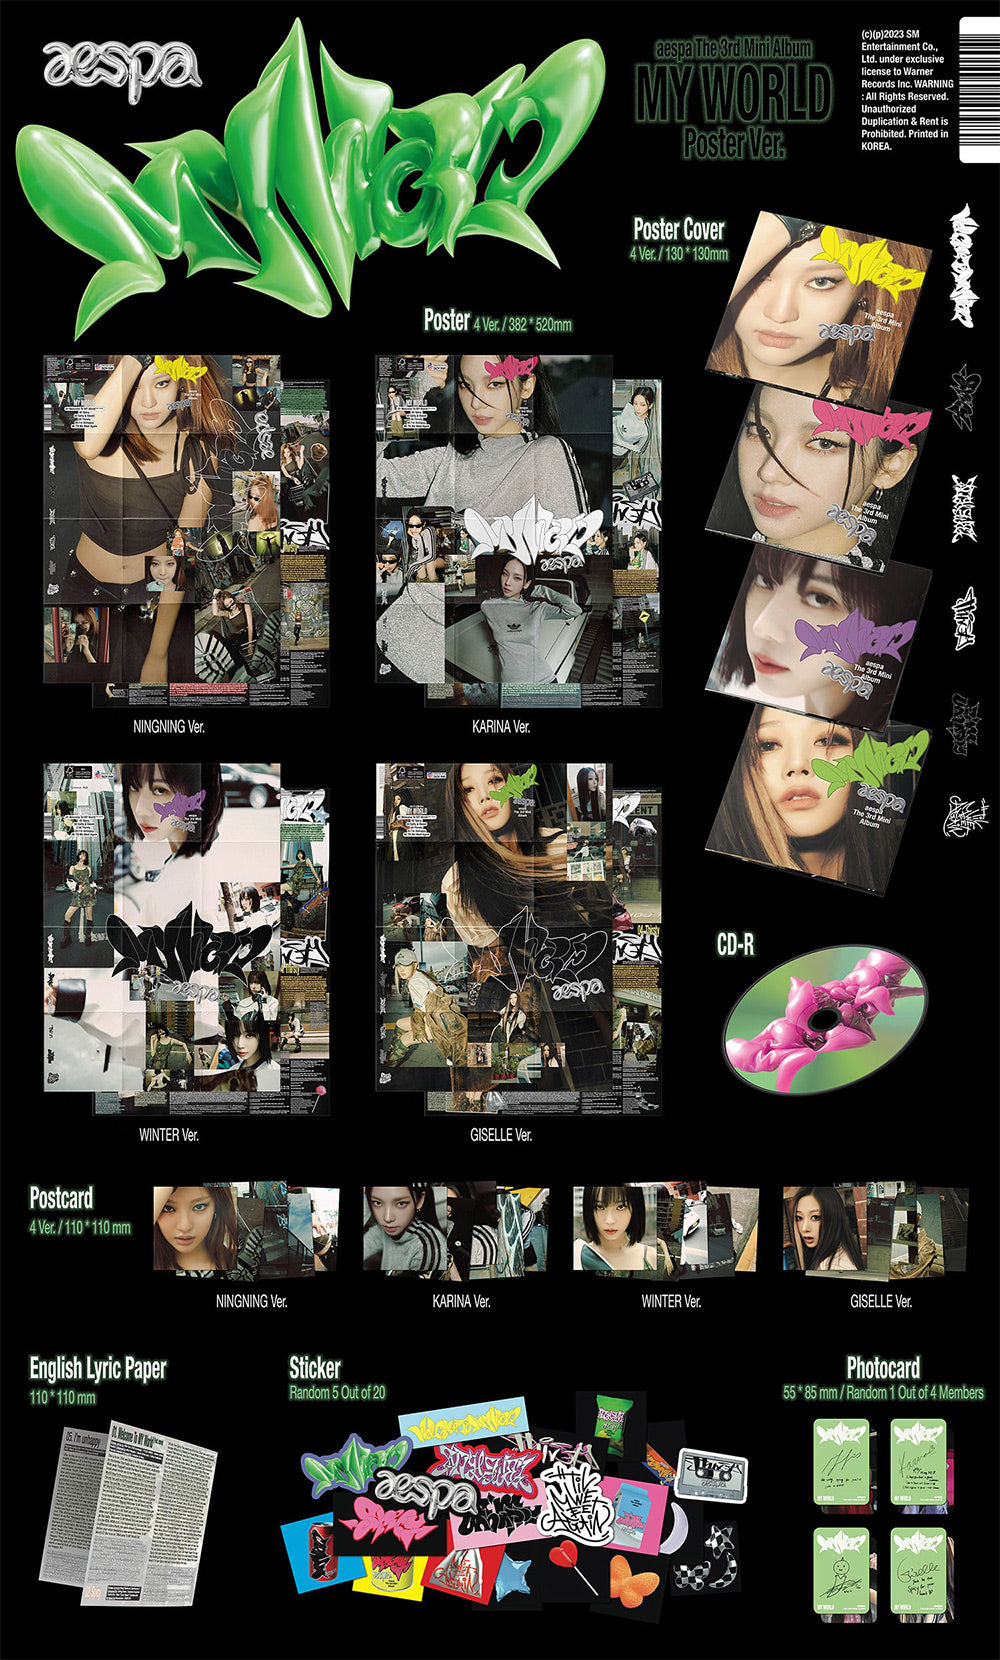 aespa - 3rd Mini Album [MY WORLD] Poster Ver.